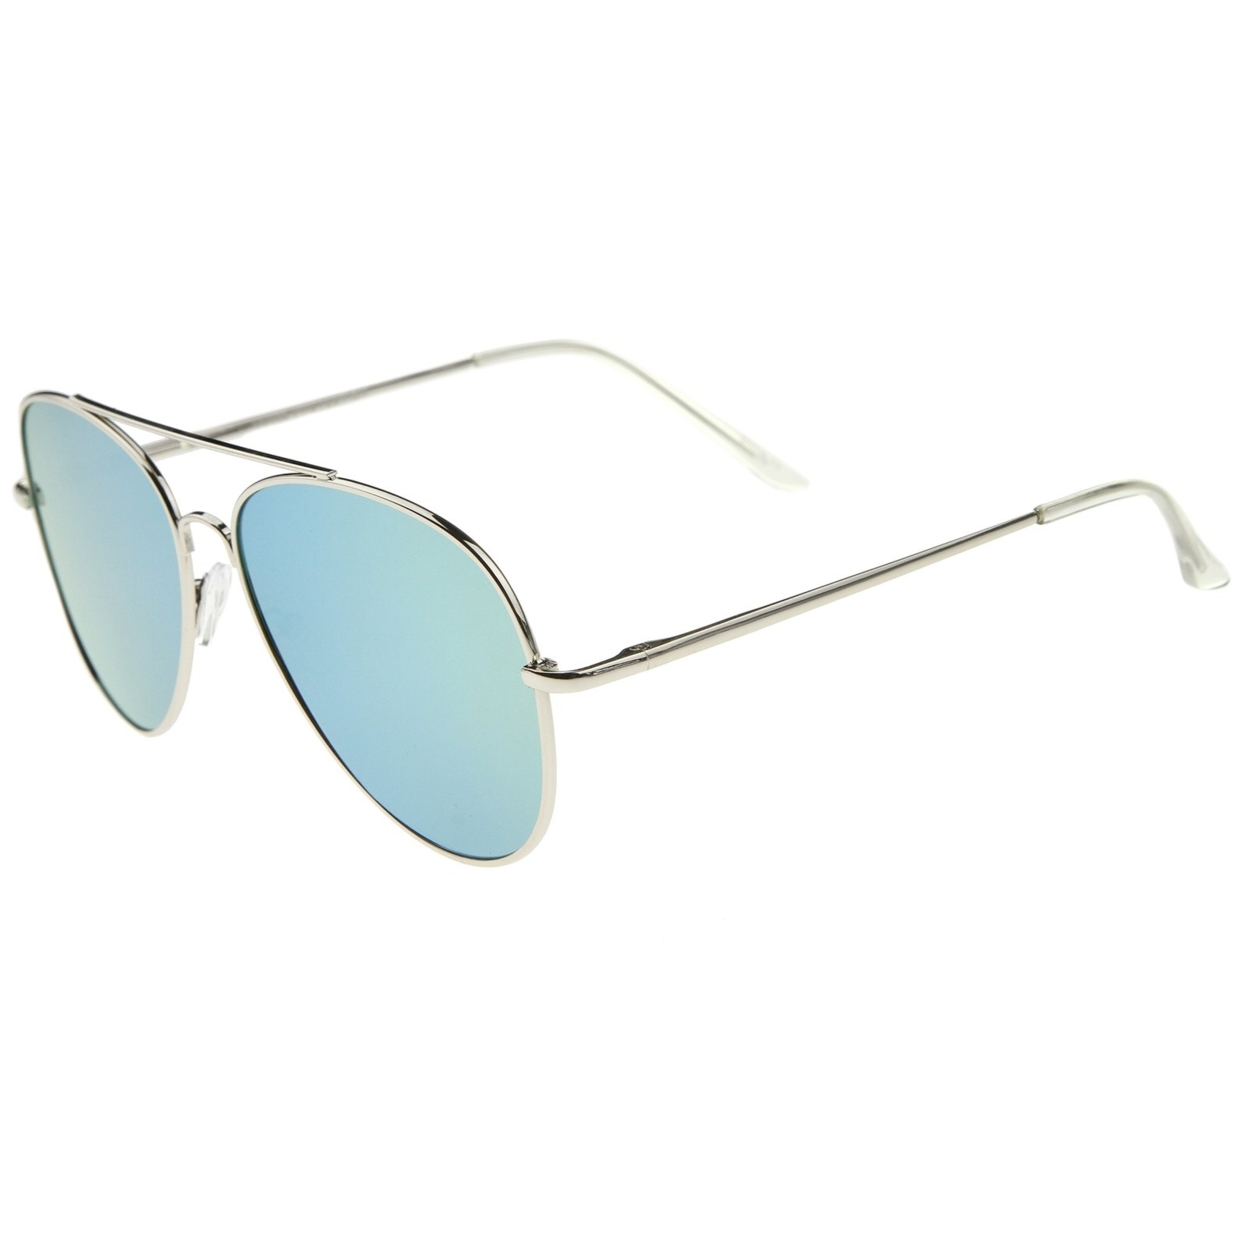 Large Full Metal Color Mirror Teardrop Flat Lens Aviator Sunglasses 60mm - Silver / Pink Mirror